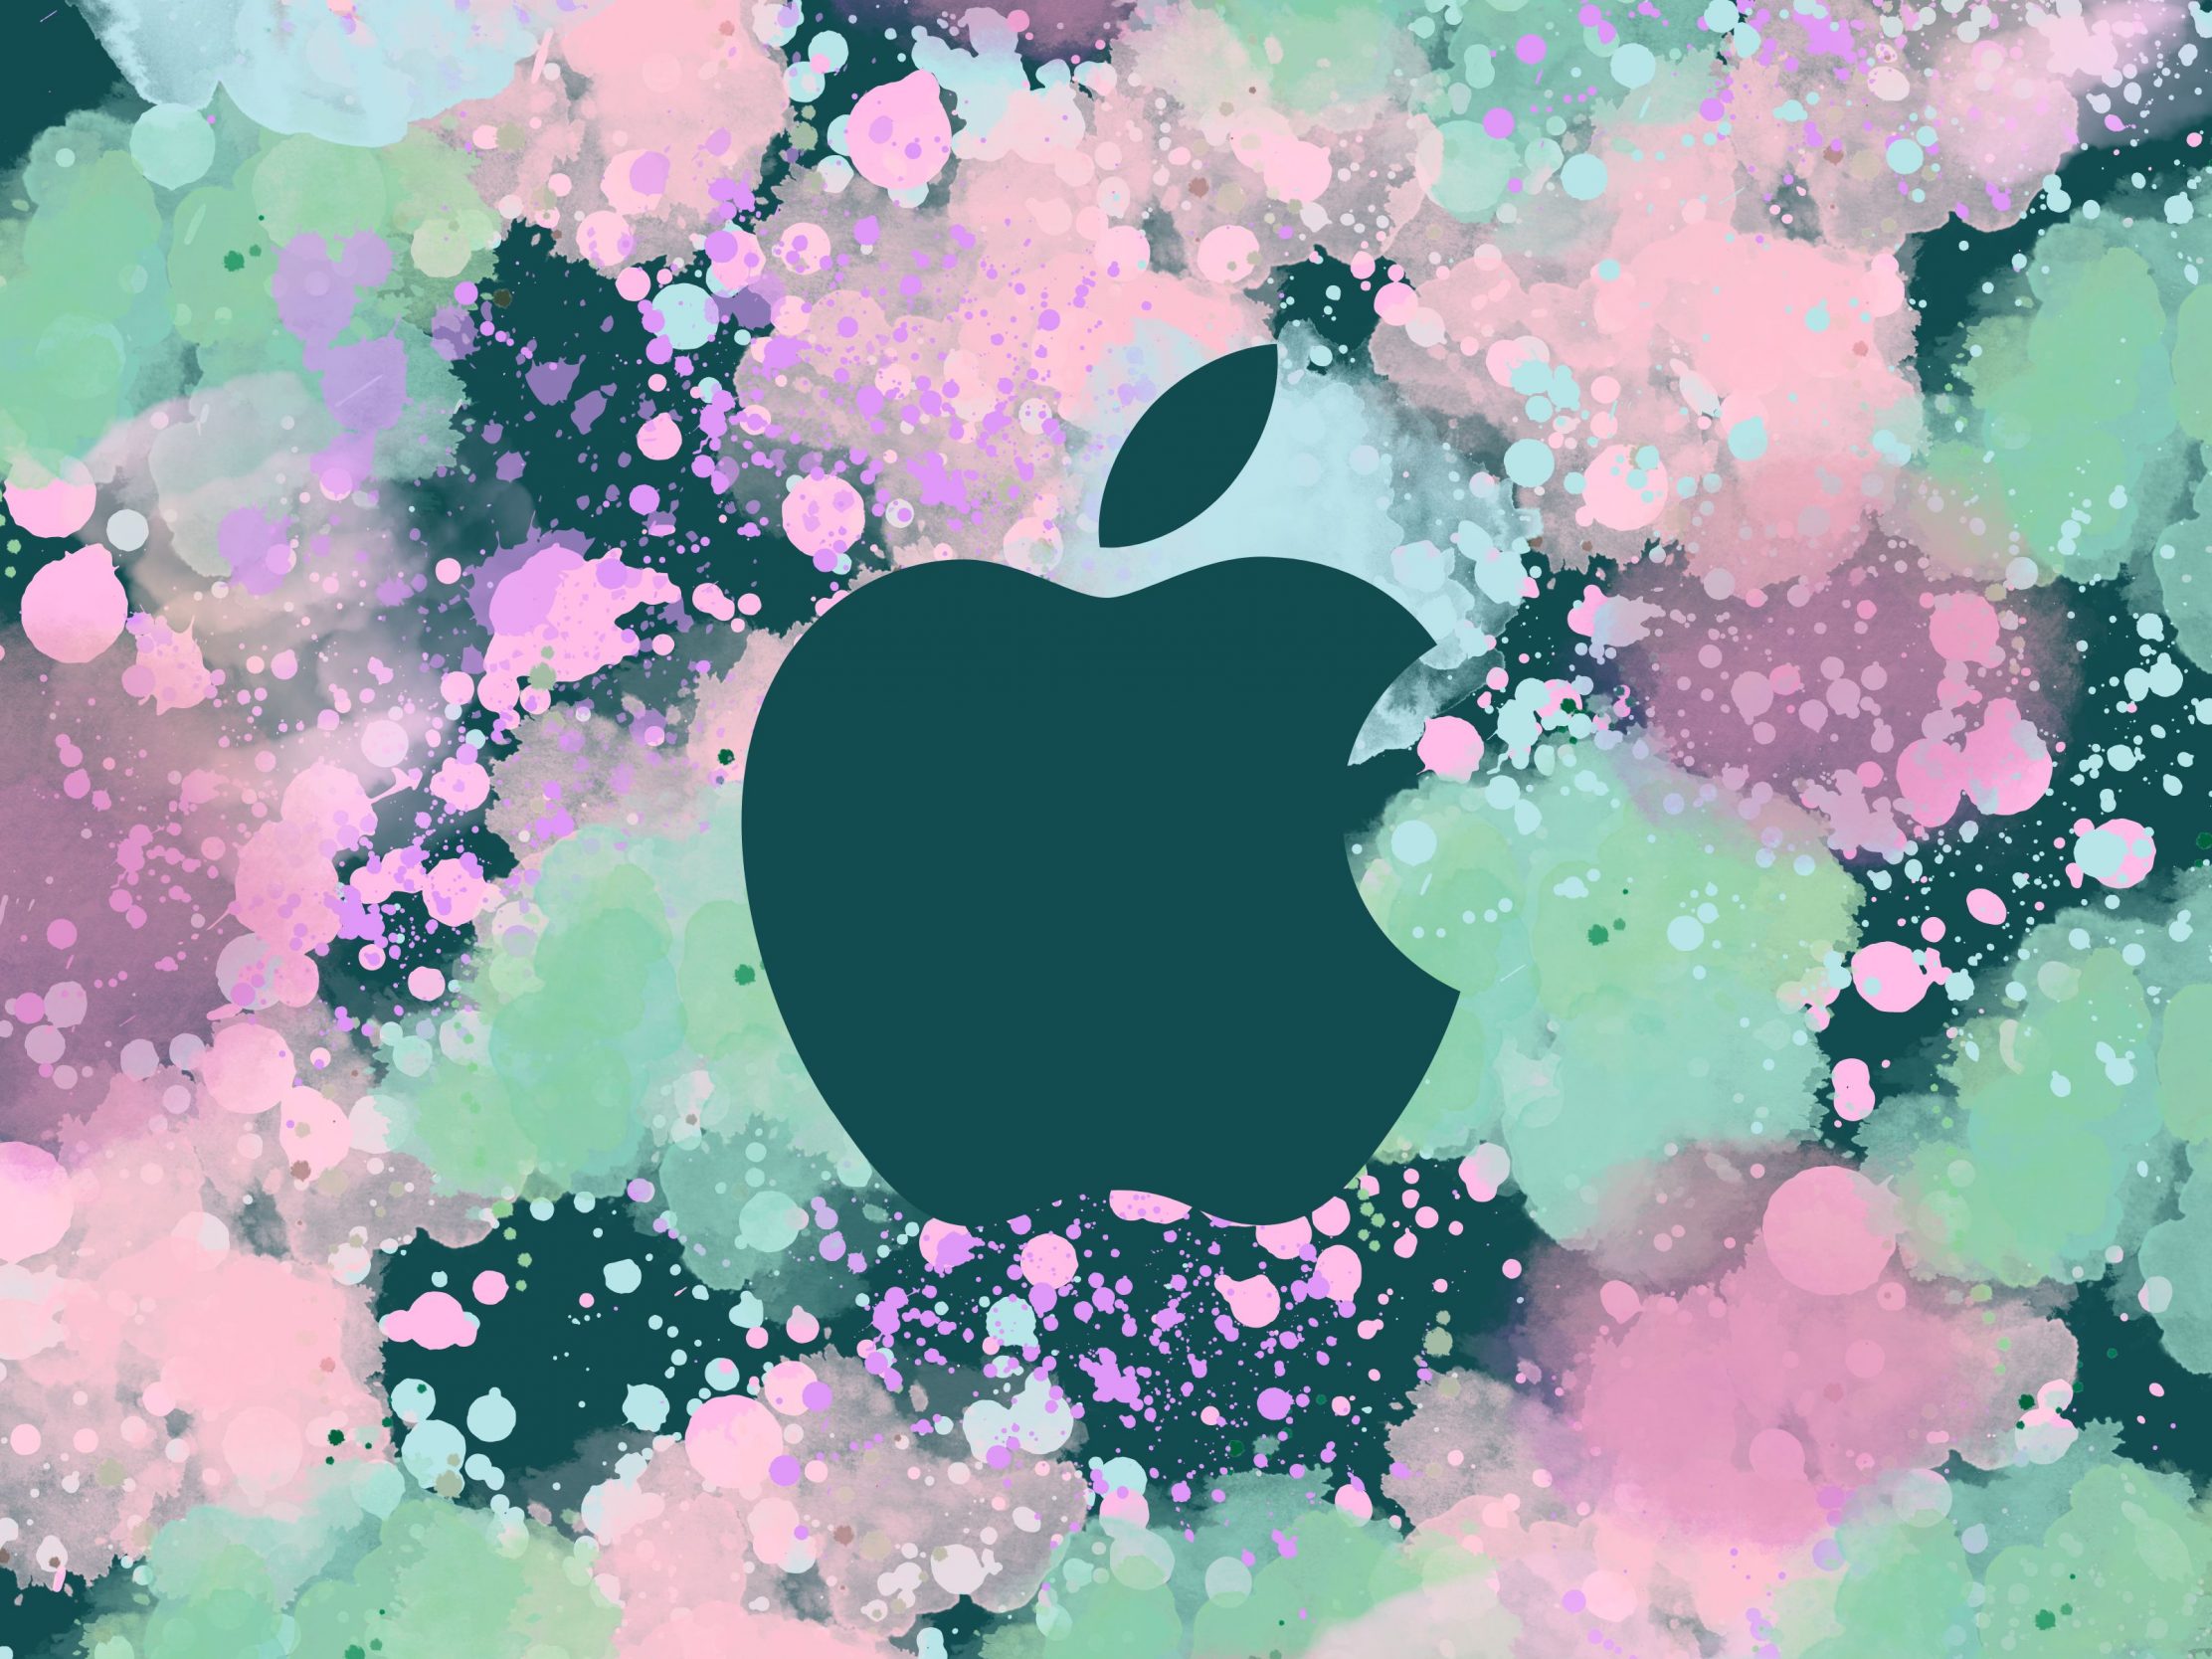 2224x1668 iPad Pro wallpapers Pastel Watercolour Apple Ipad Wallpaper 2224x1668 pixels resolution